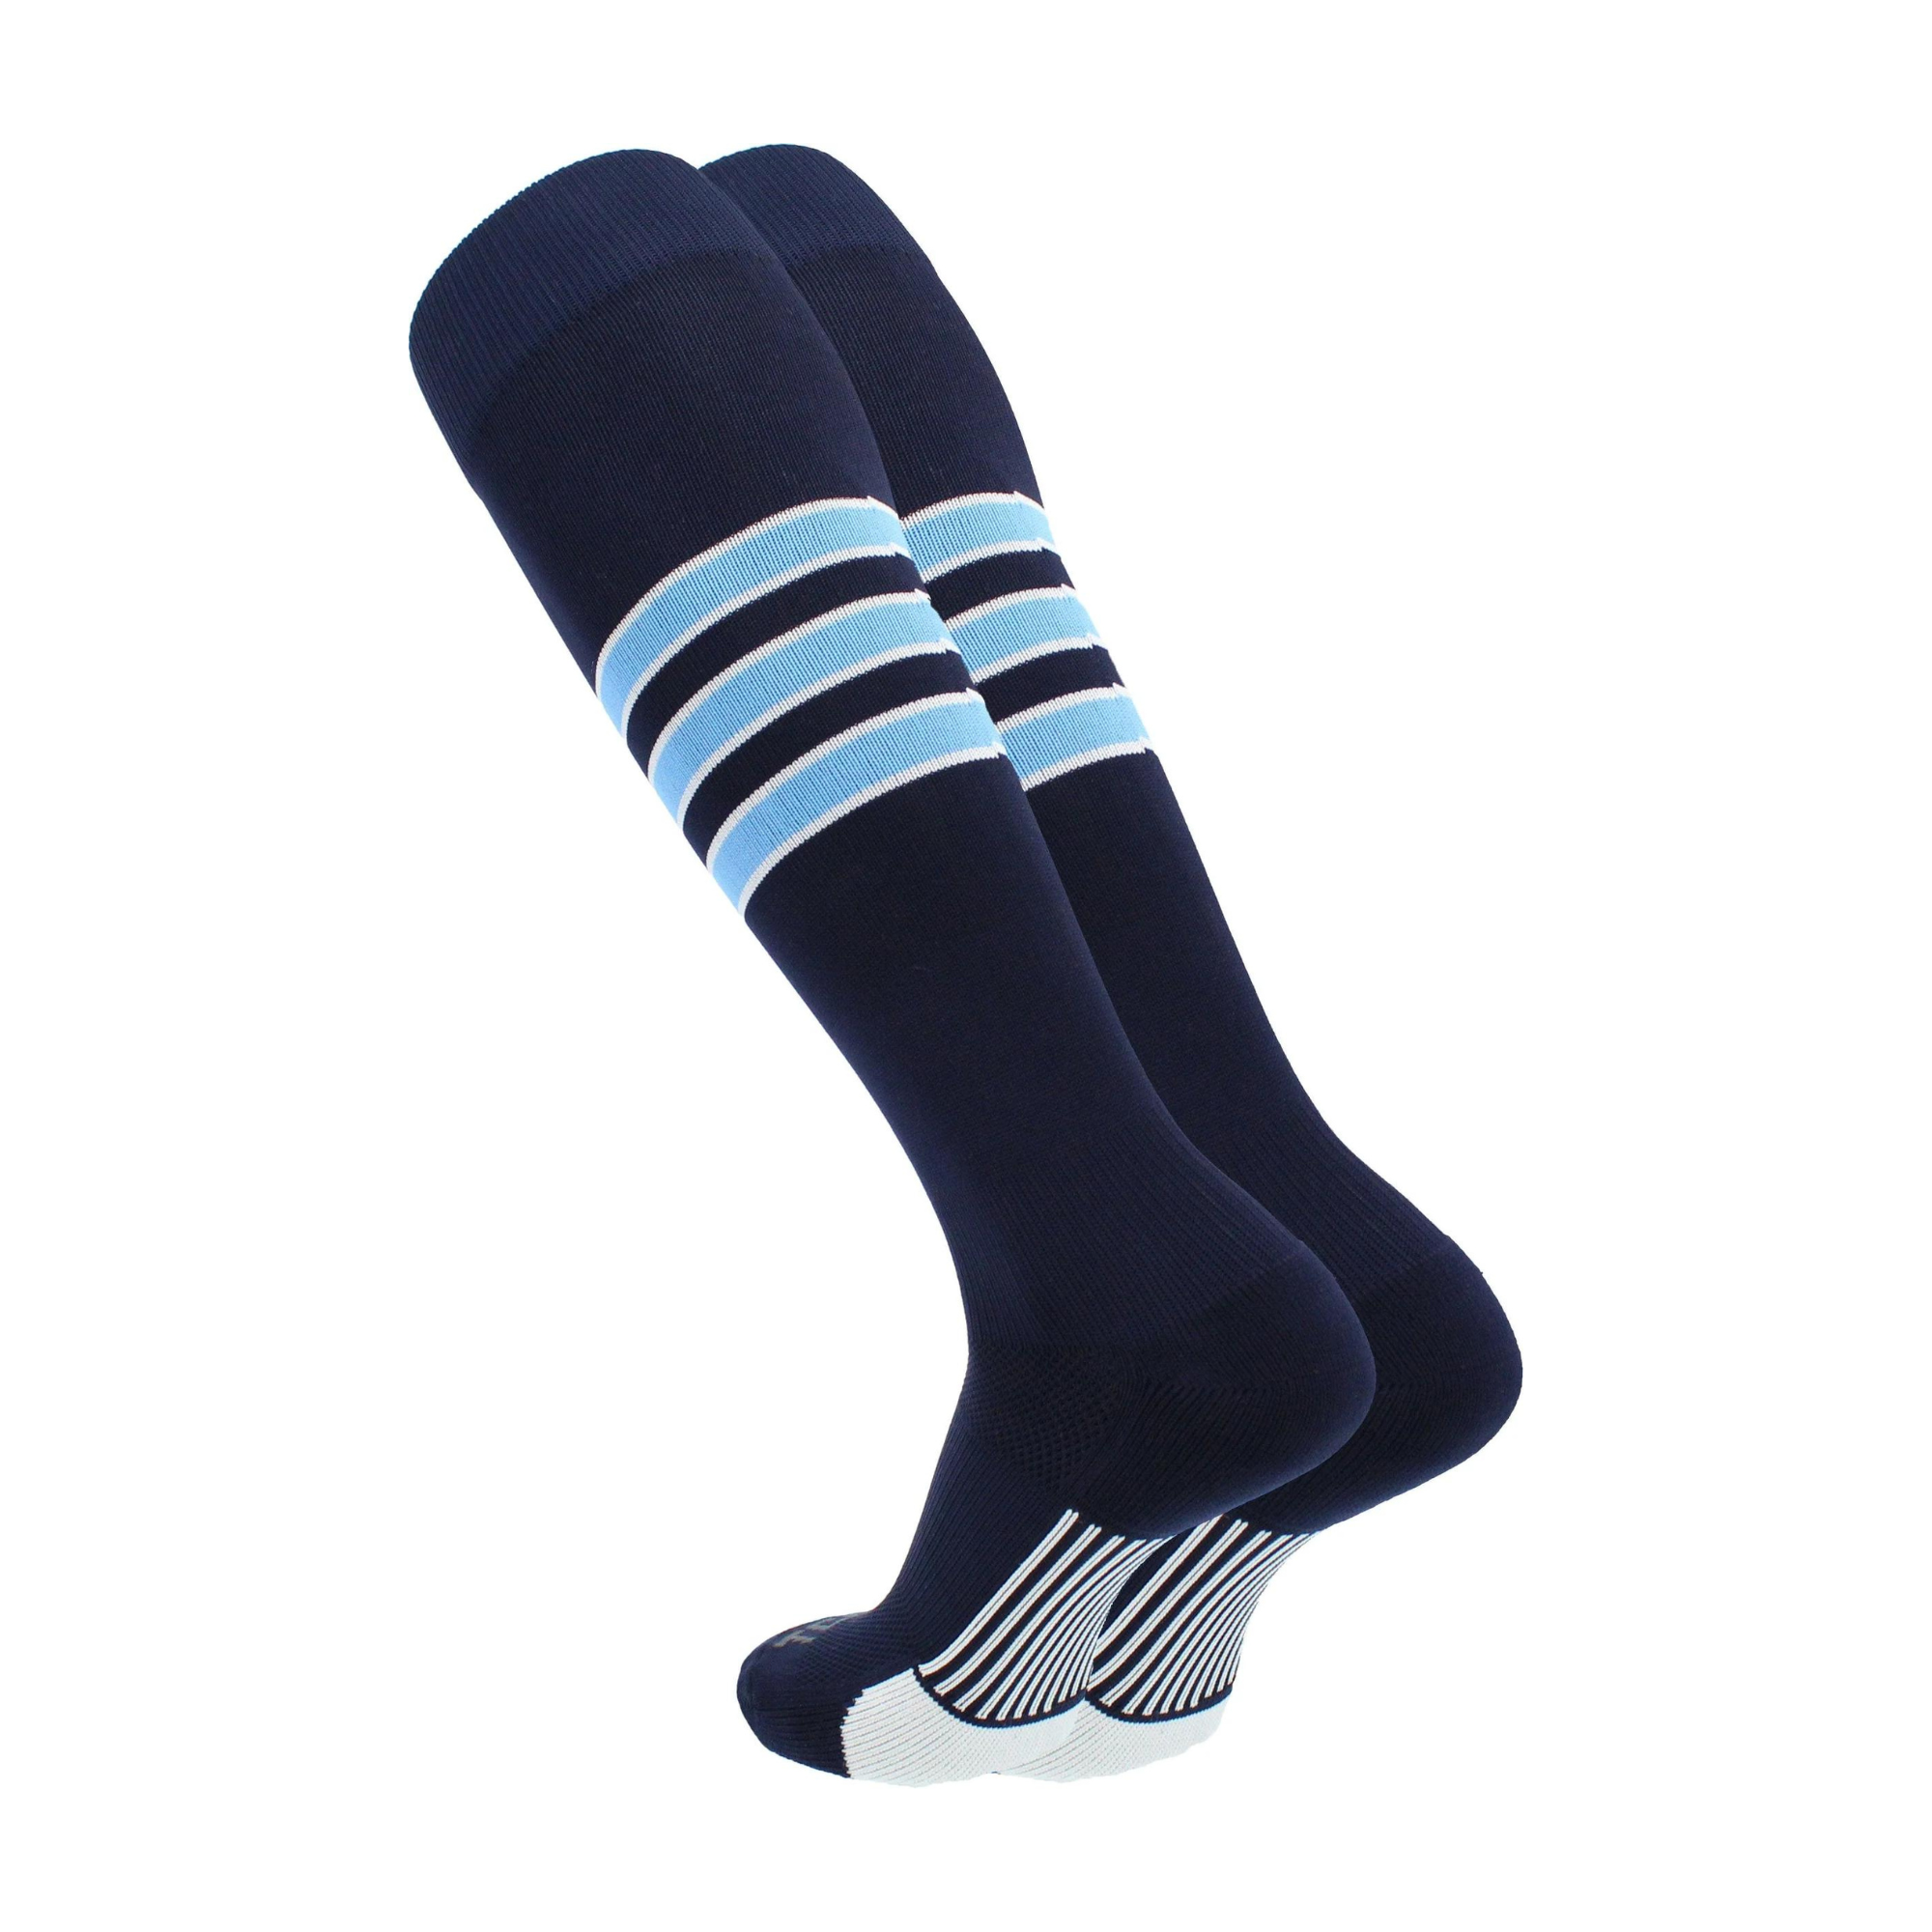 TCK Dugout Series - Navy White Columbia Blue Sock